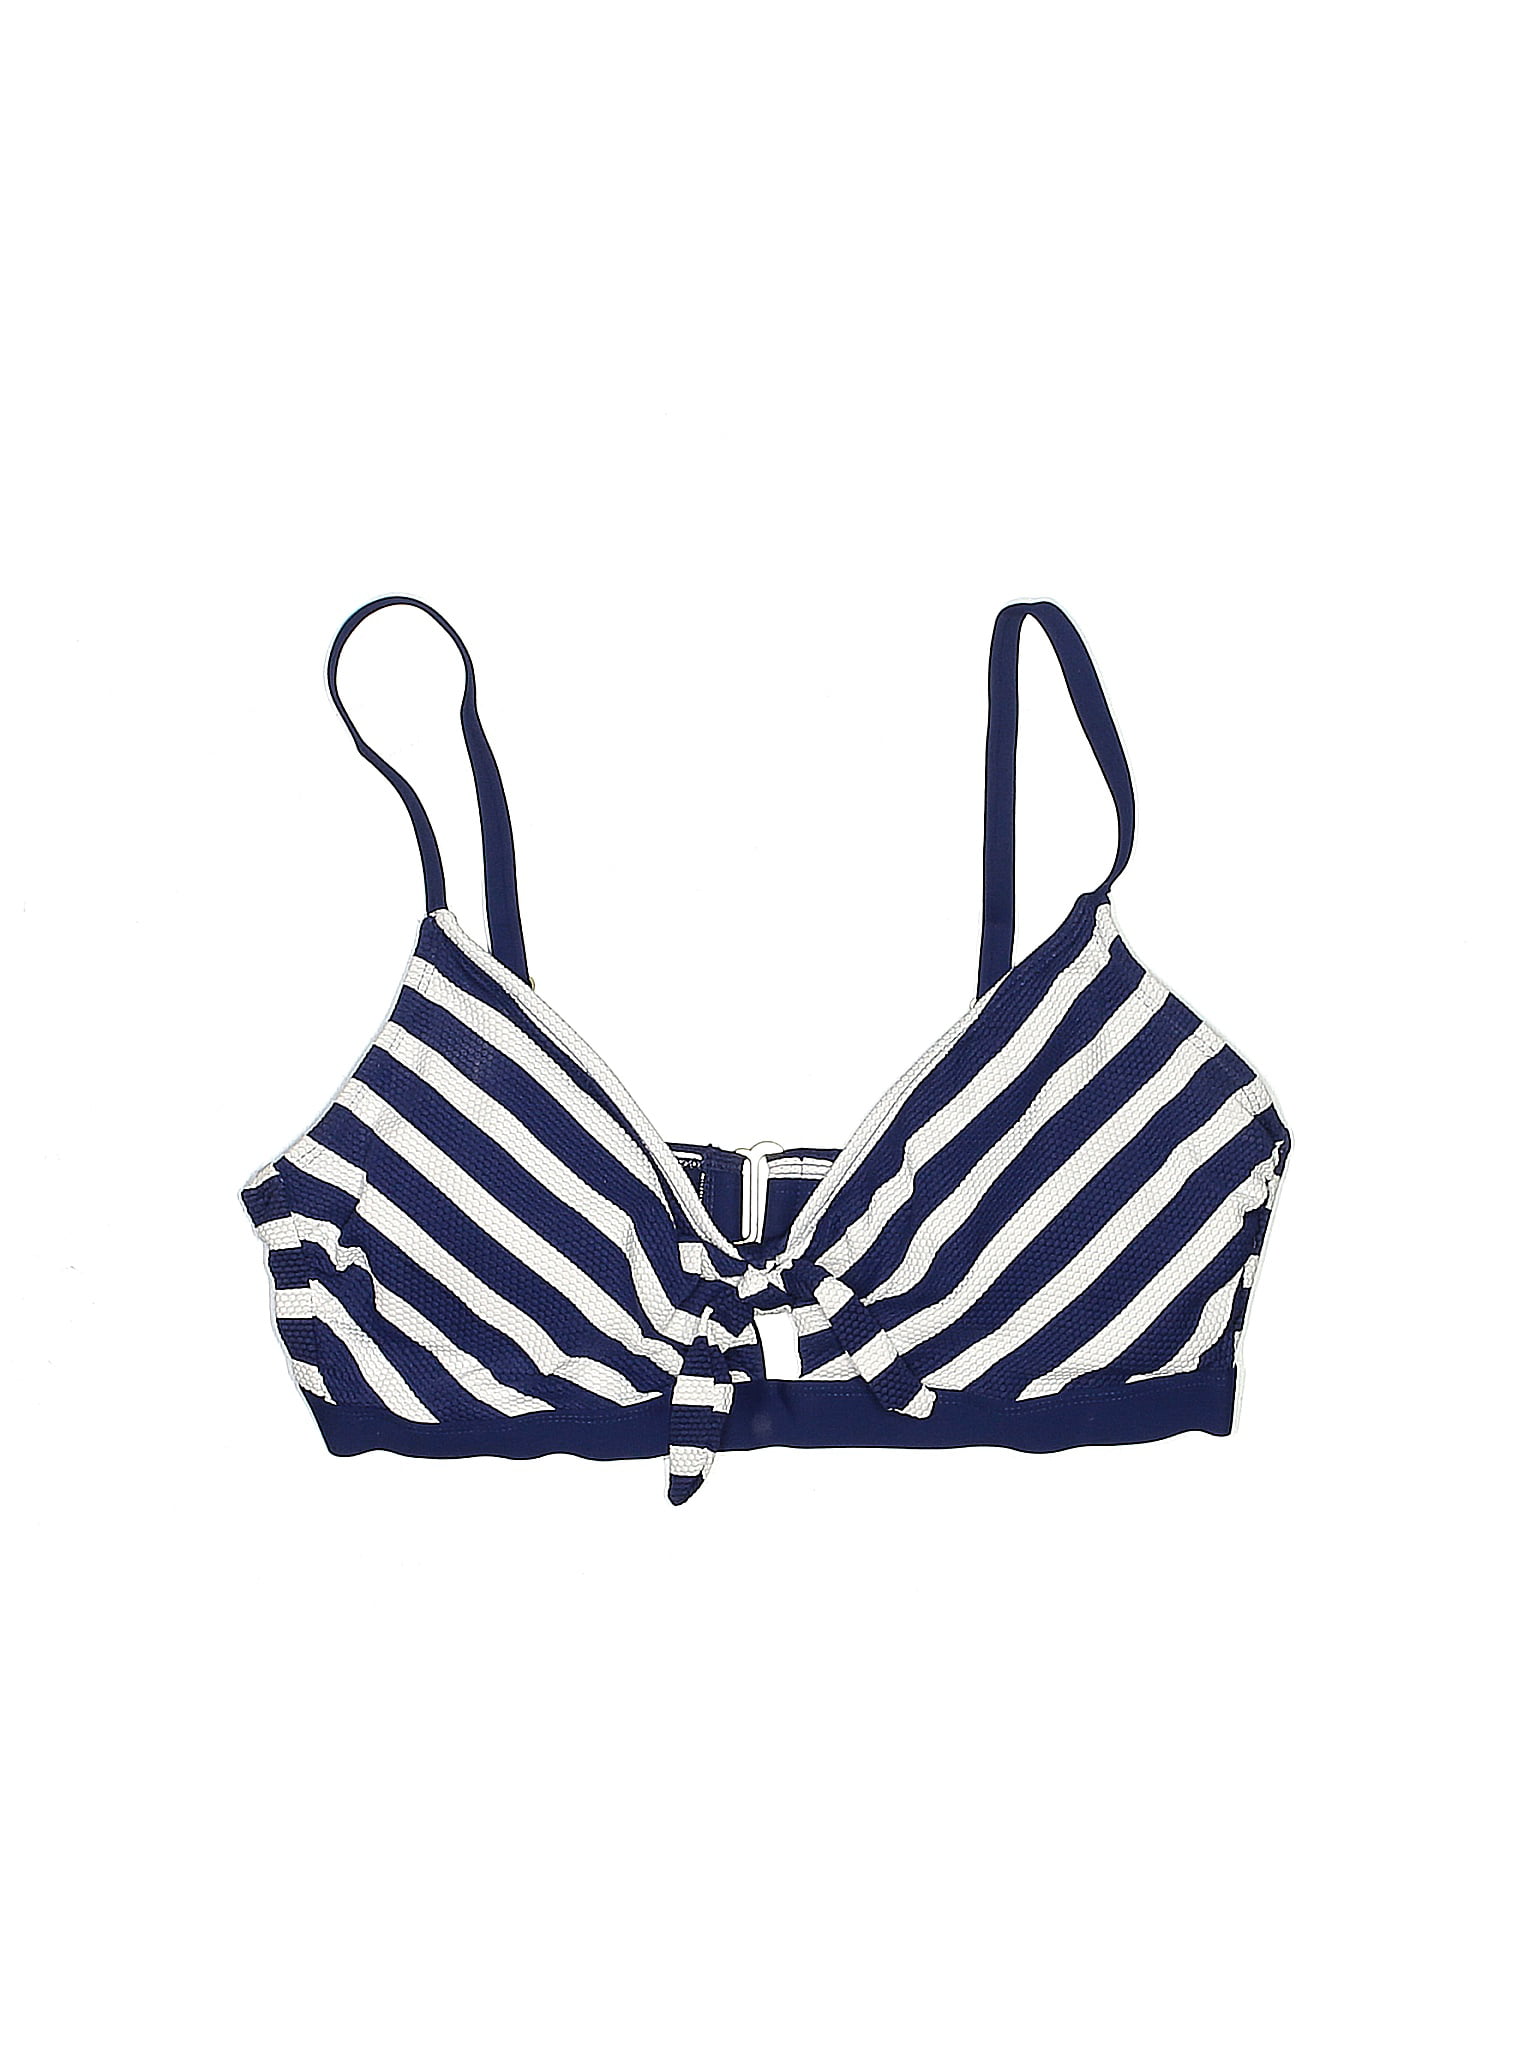 Apt.9 Women's Size Small Medium Large Blue Black White Stripe Swim Bikini Top 